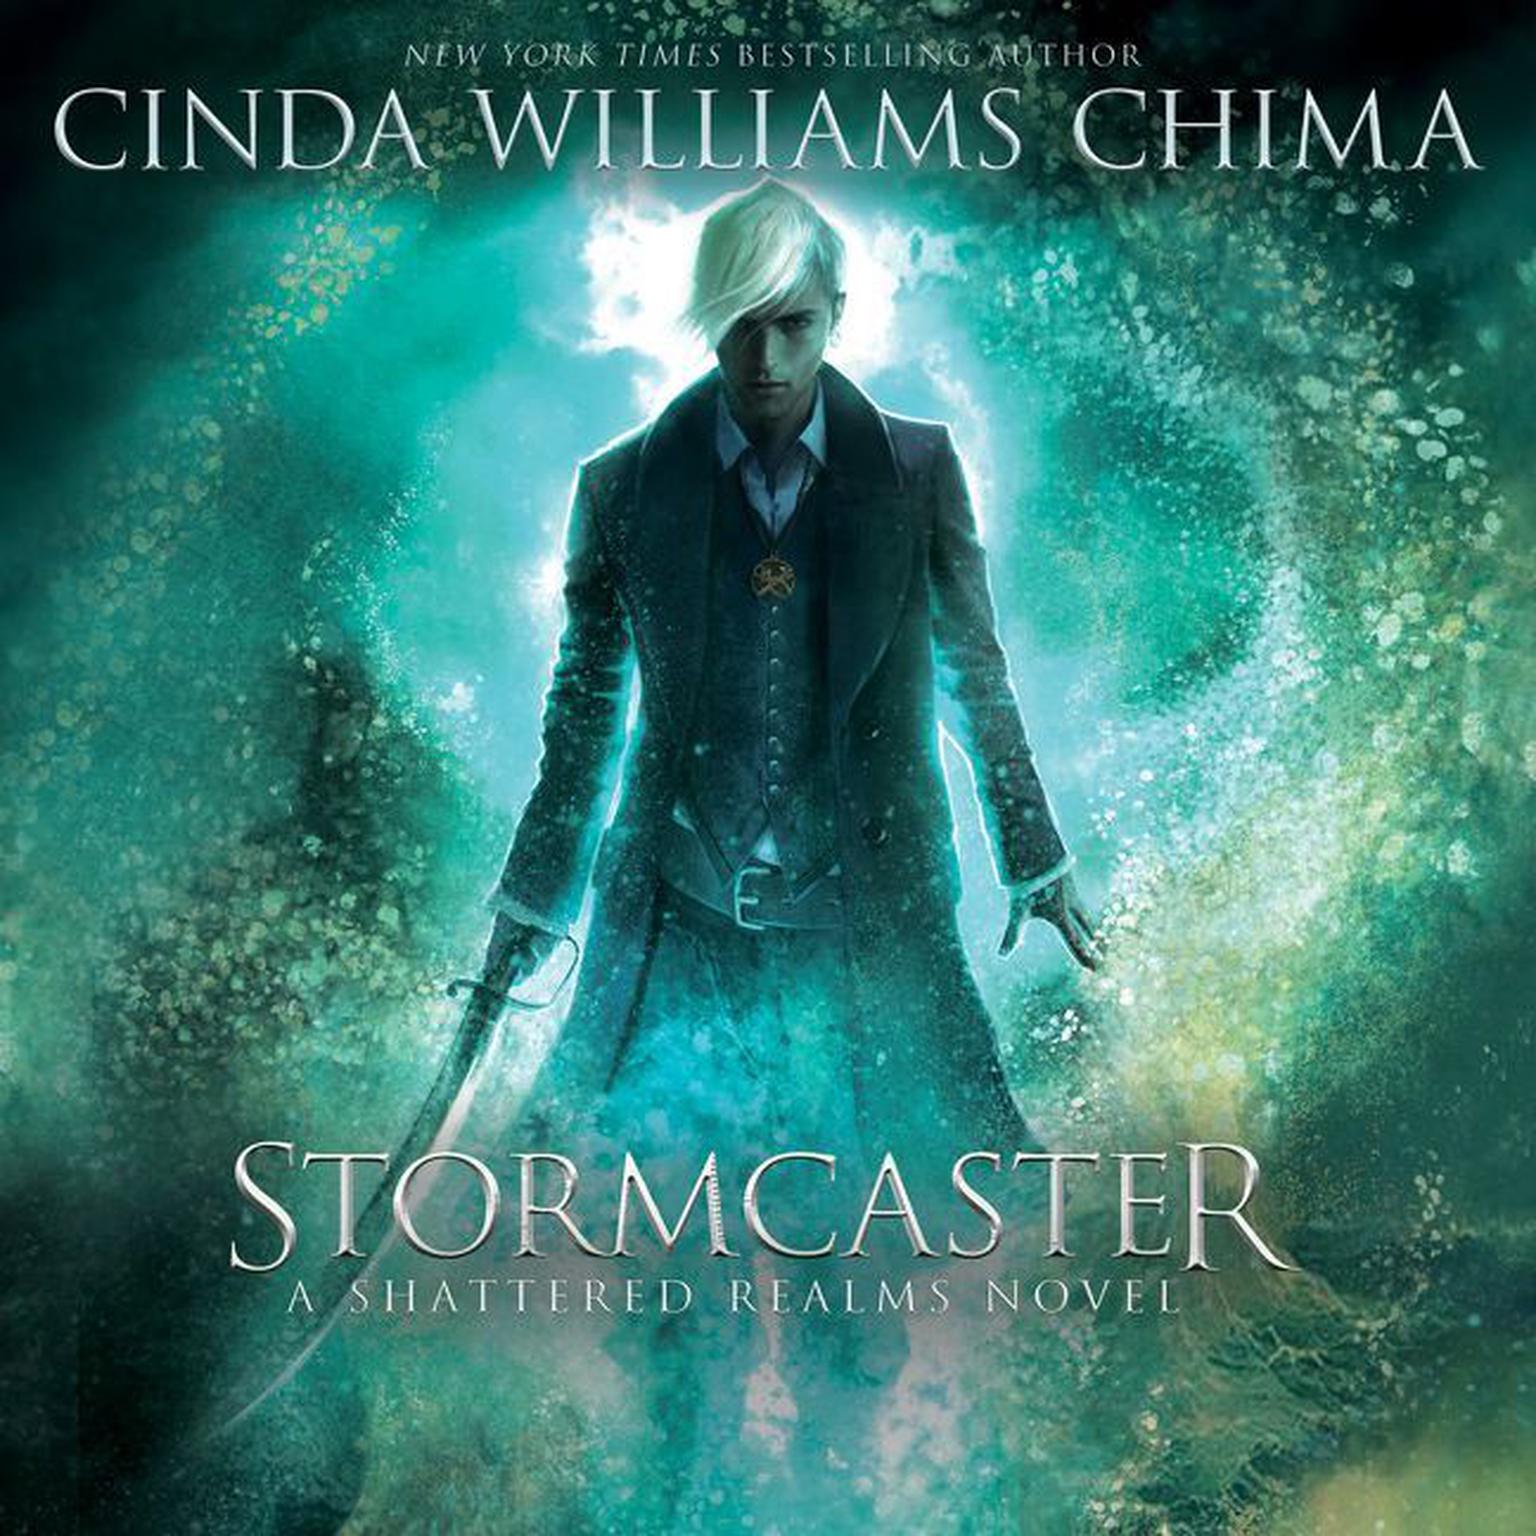 Stormcaster Audiobook, by Cinda Williams Chima